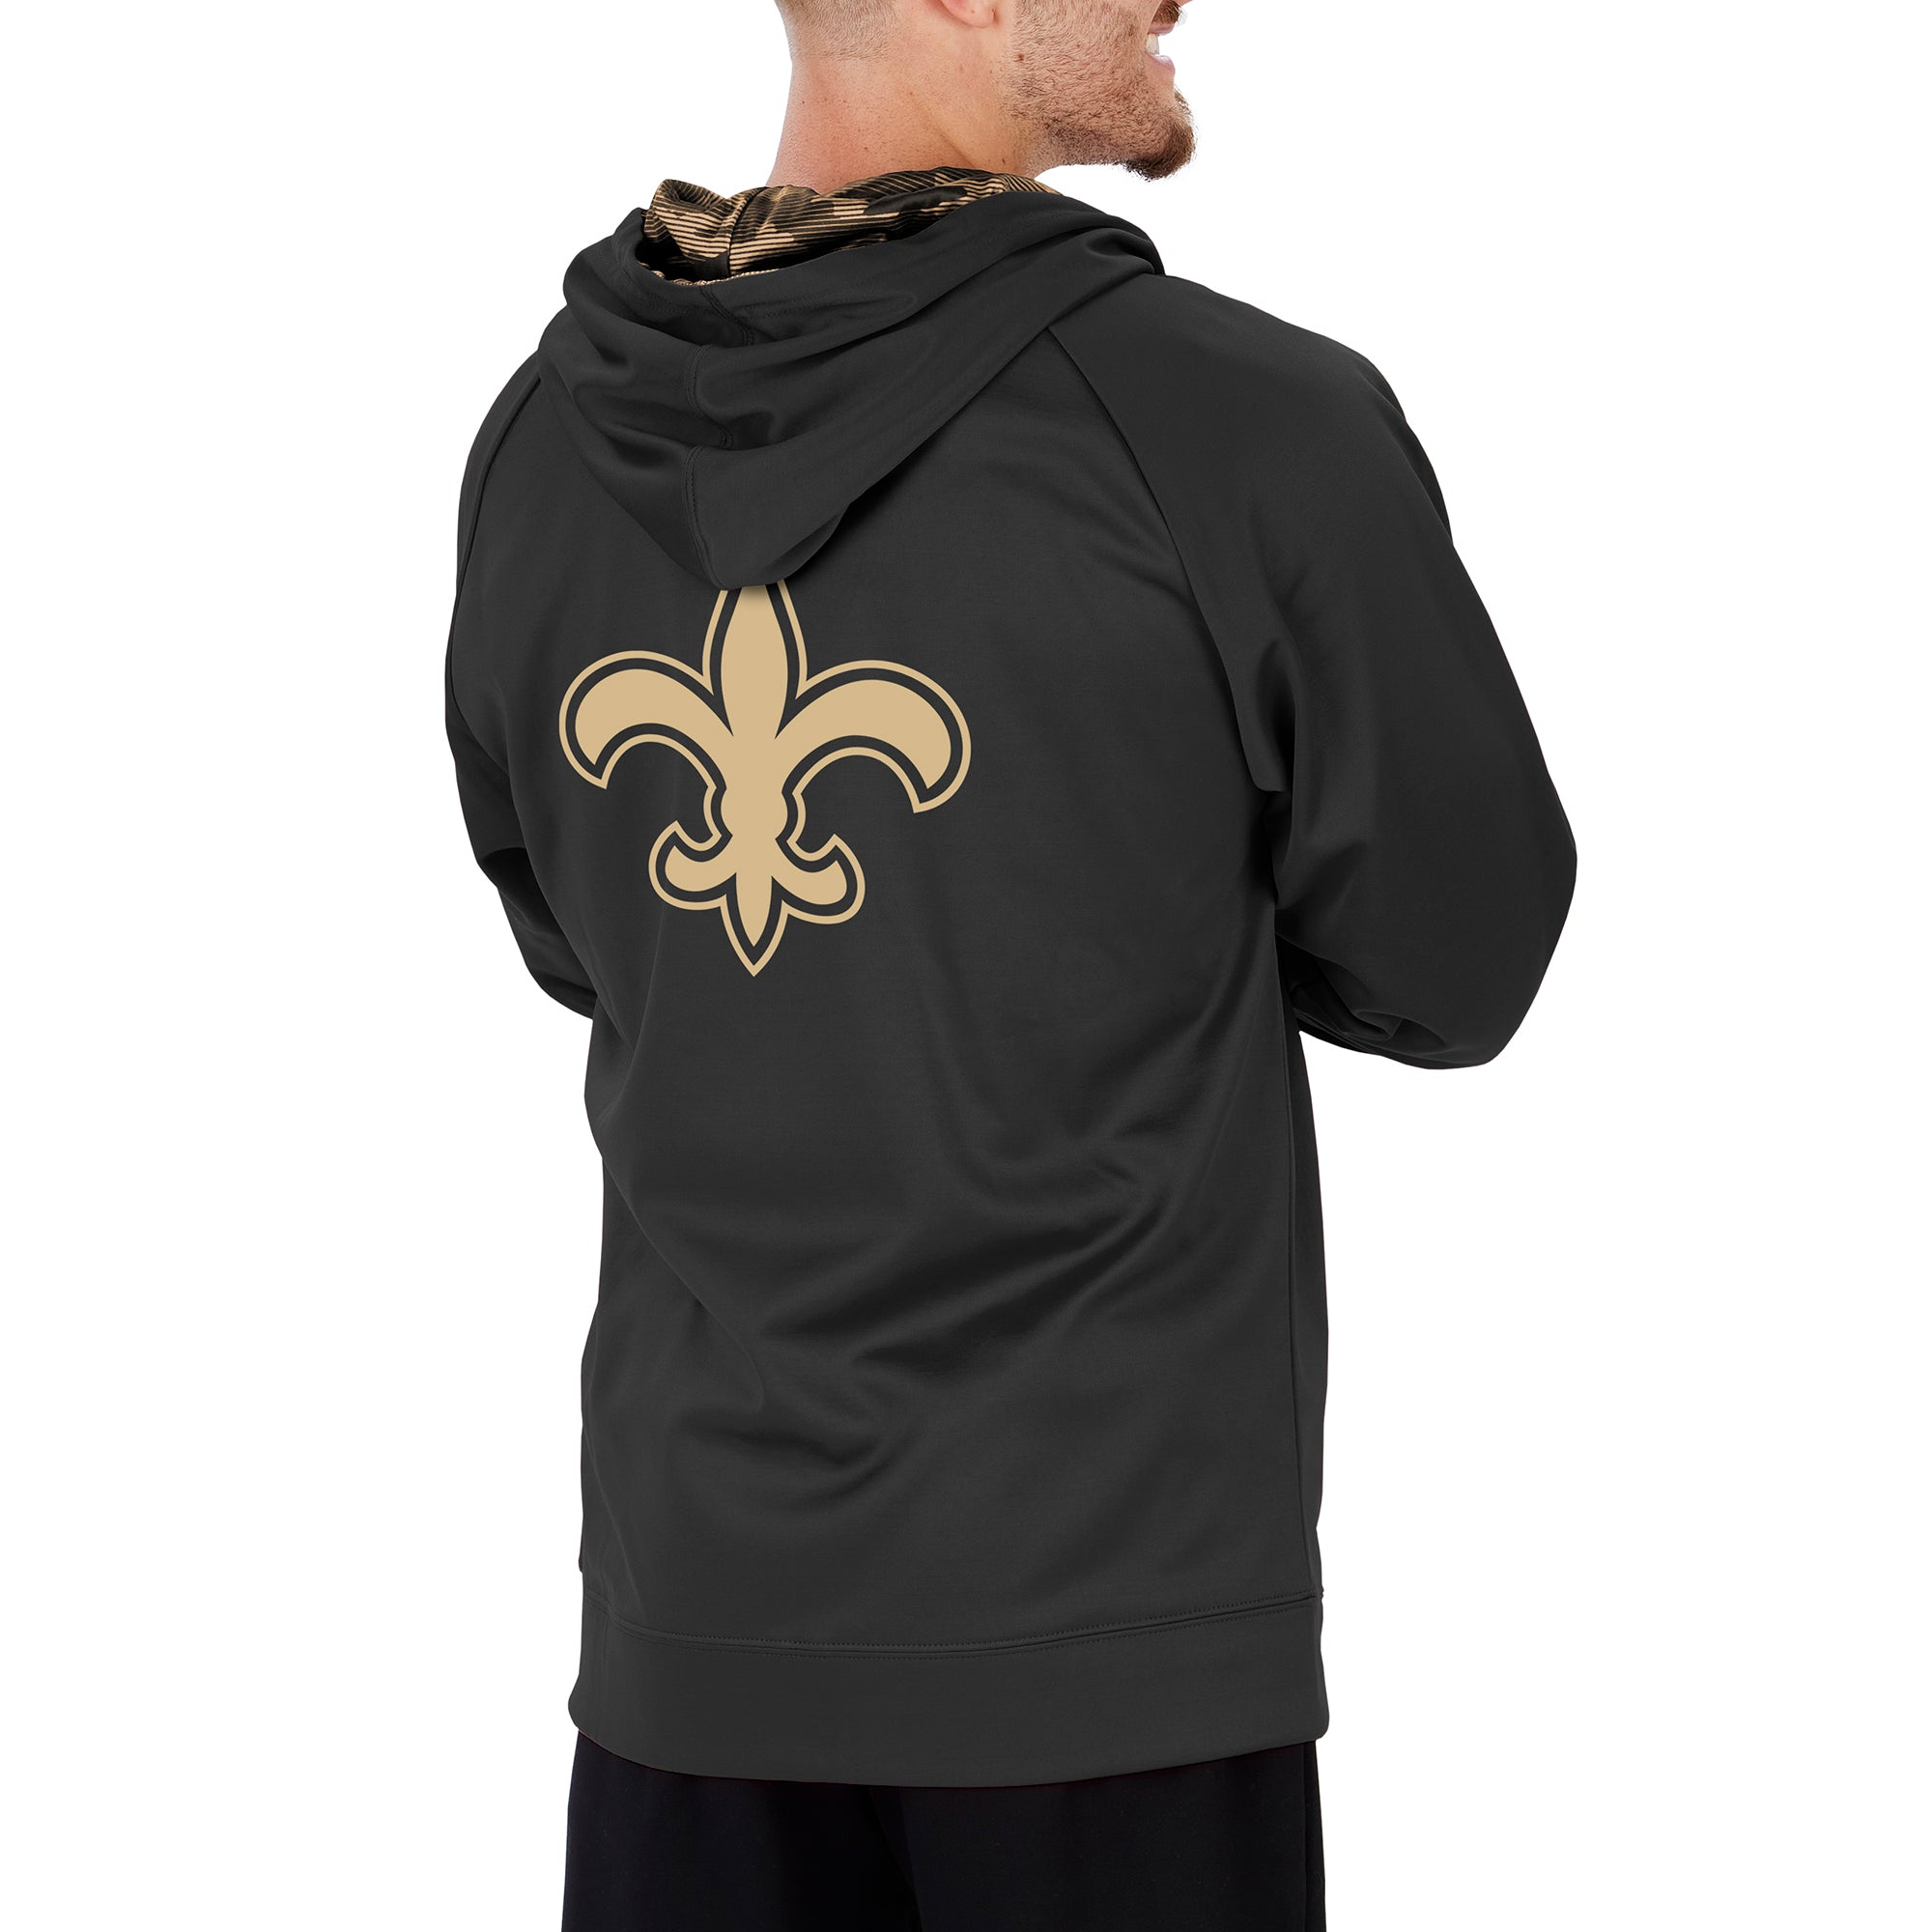 Football Fan Shop Officially Licensed NFL Full-Zip Hooded Jacket - Saints